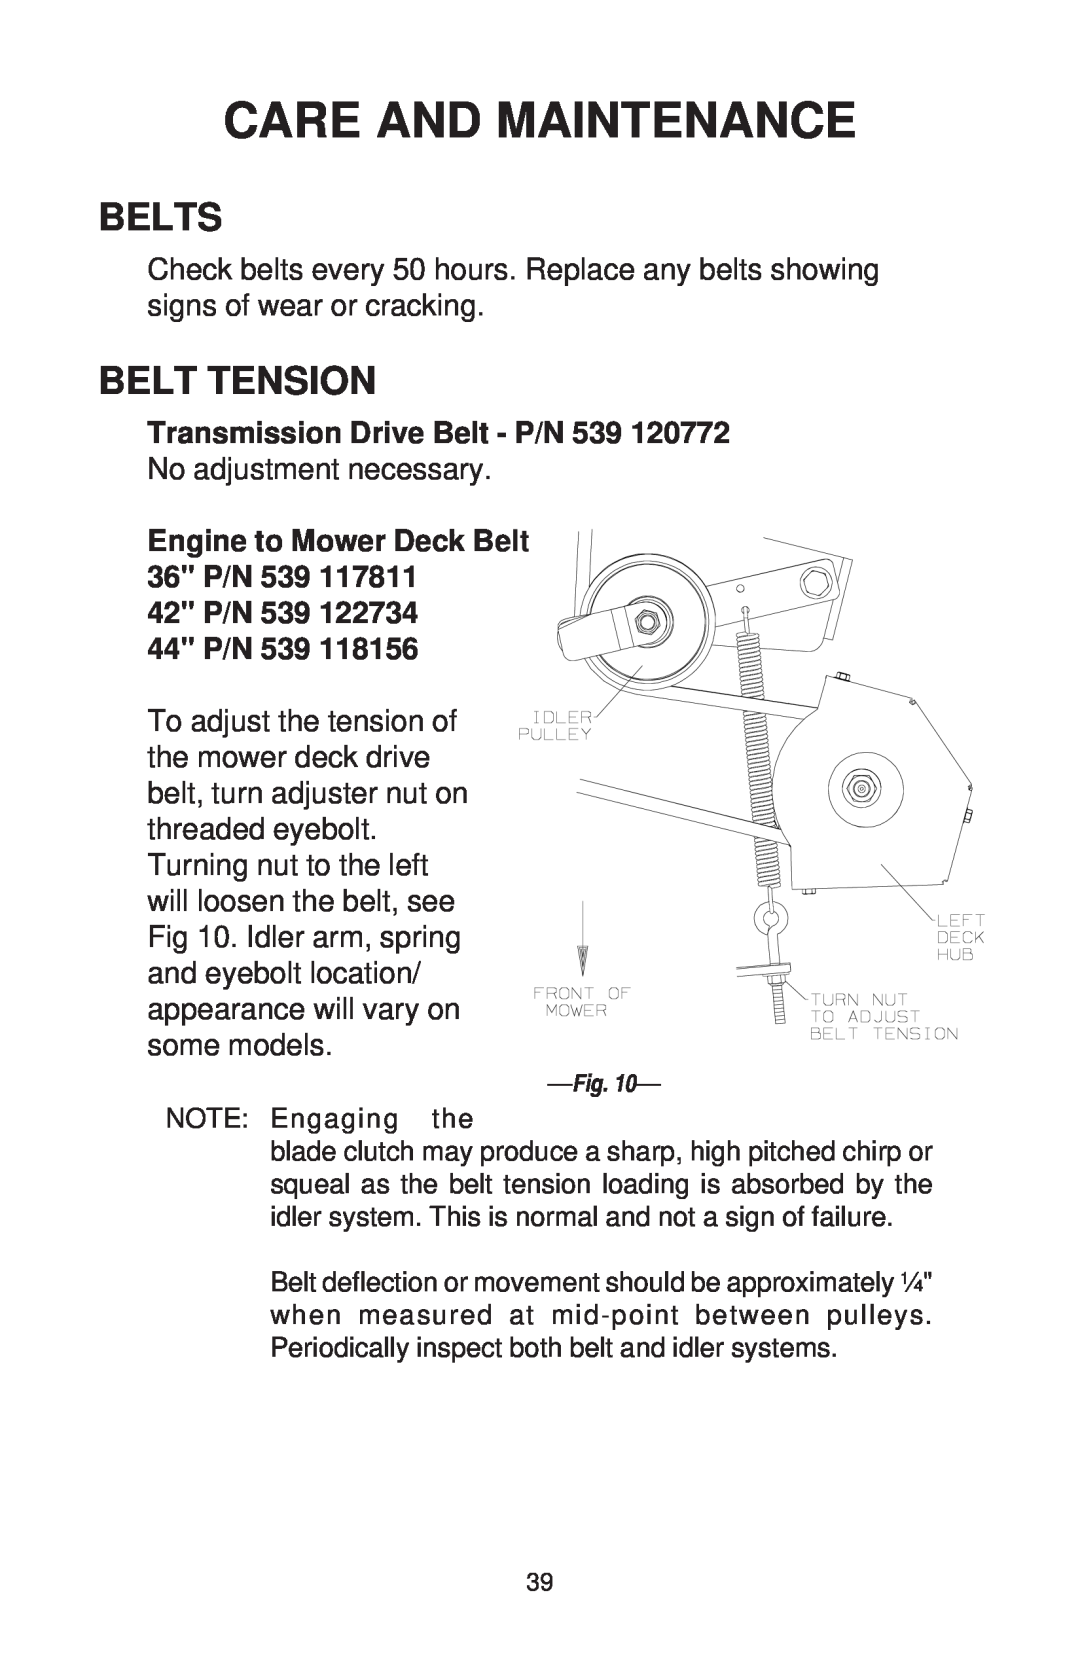 Dixon ZTR 44/968999538 manual Belts, Belt Tension, Care And Maintenance, Transmission Drive Belt - P/N 539, 44 P/N 539 